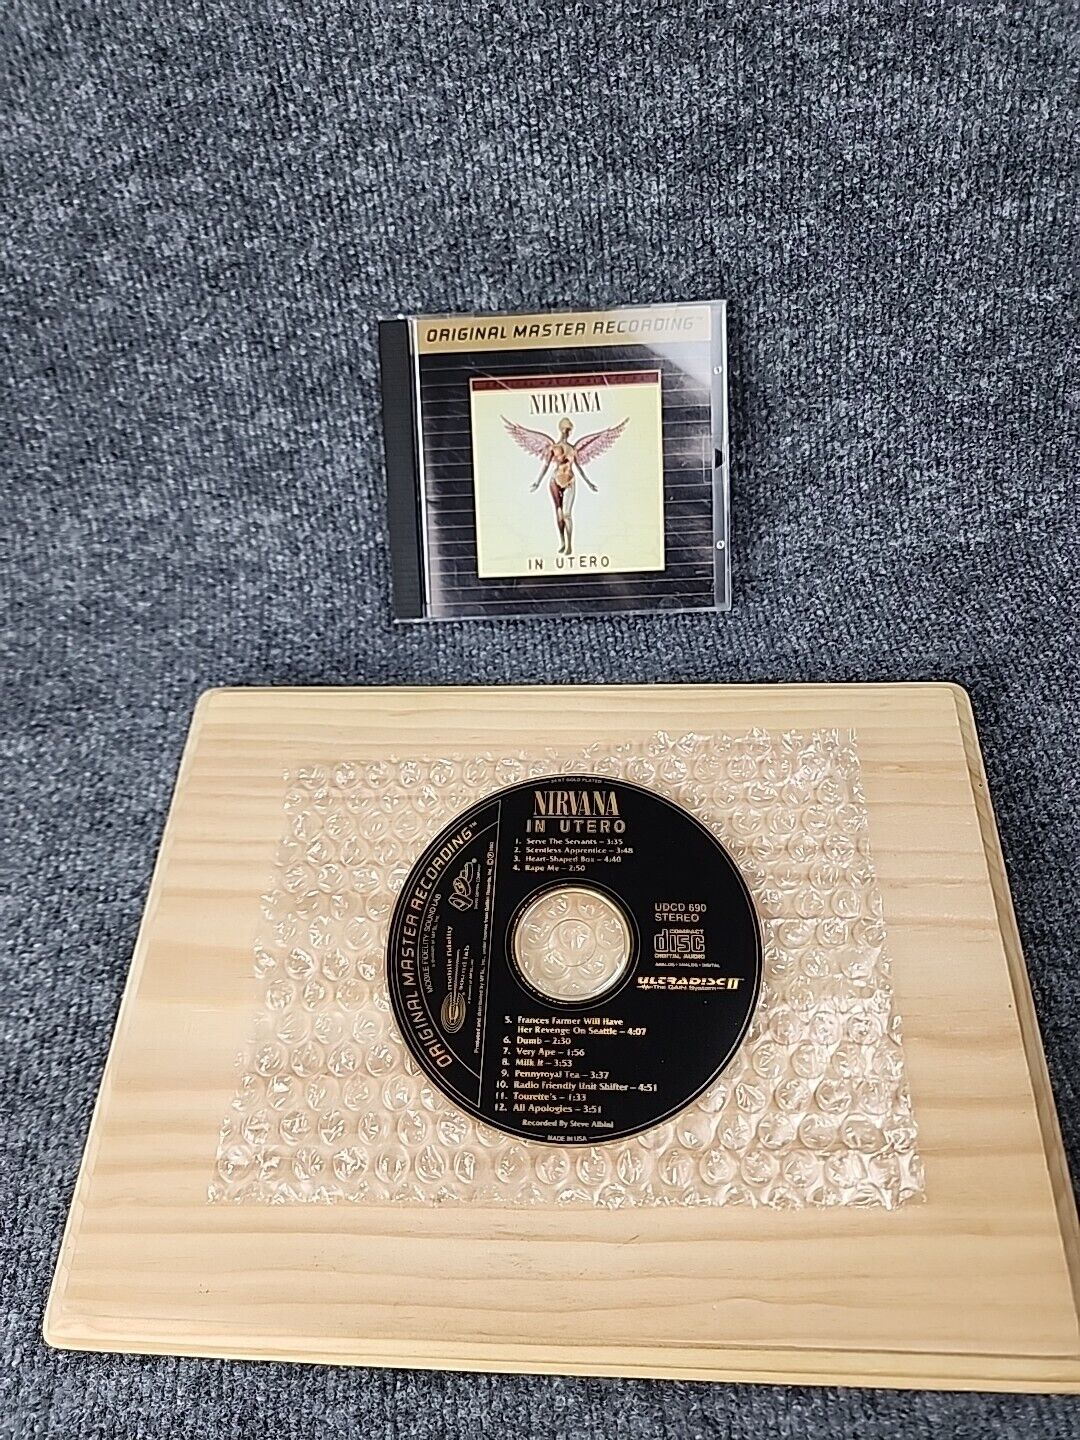 Nirvana In Utero Original Master Recording CD Rare